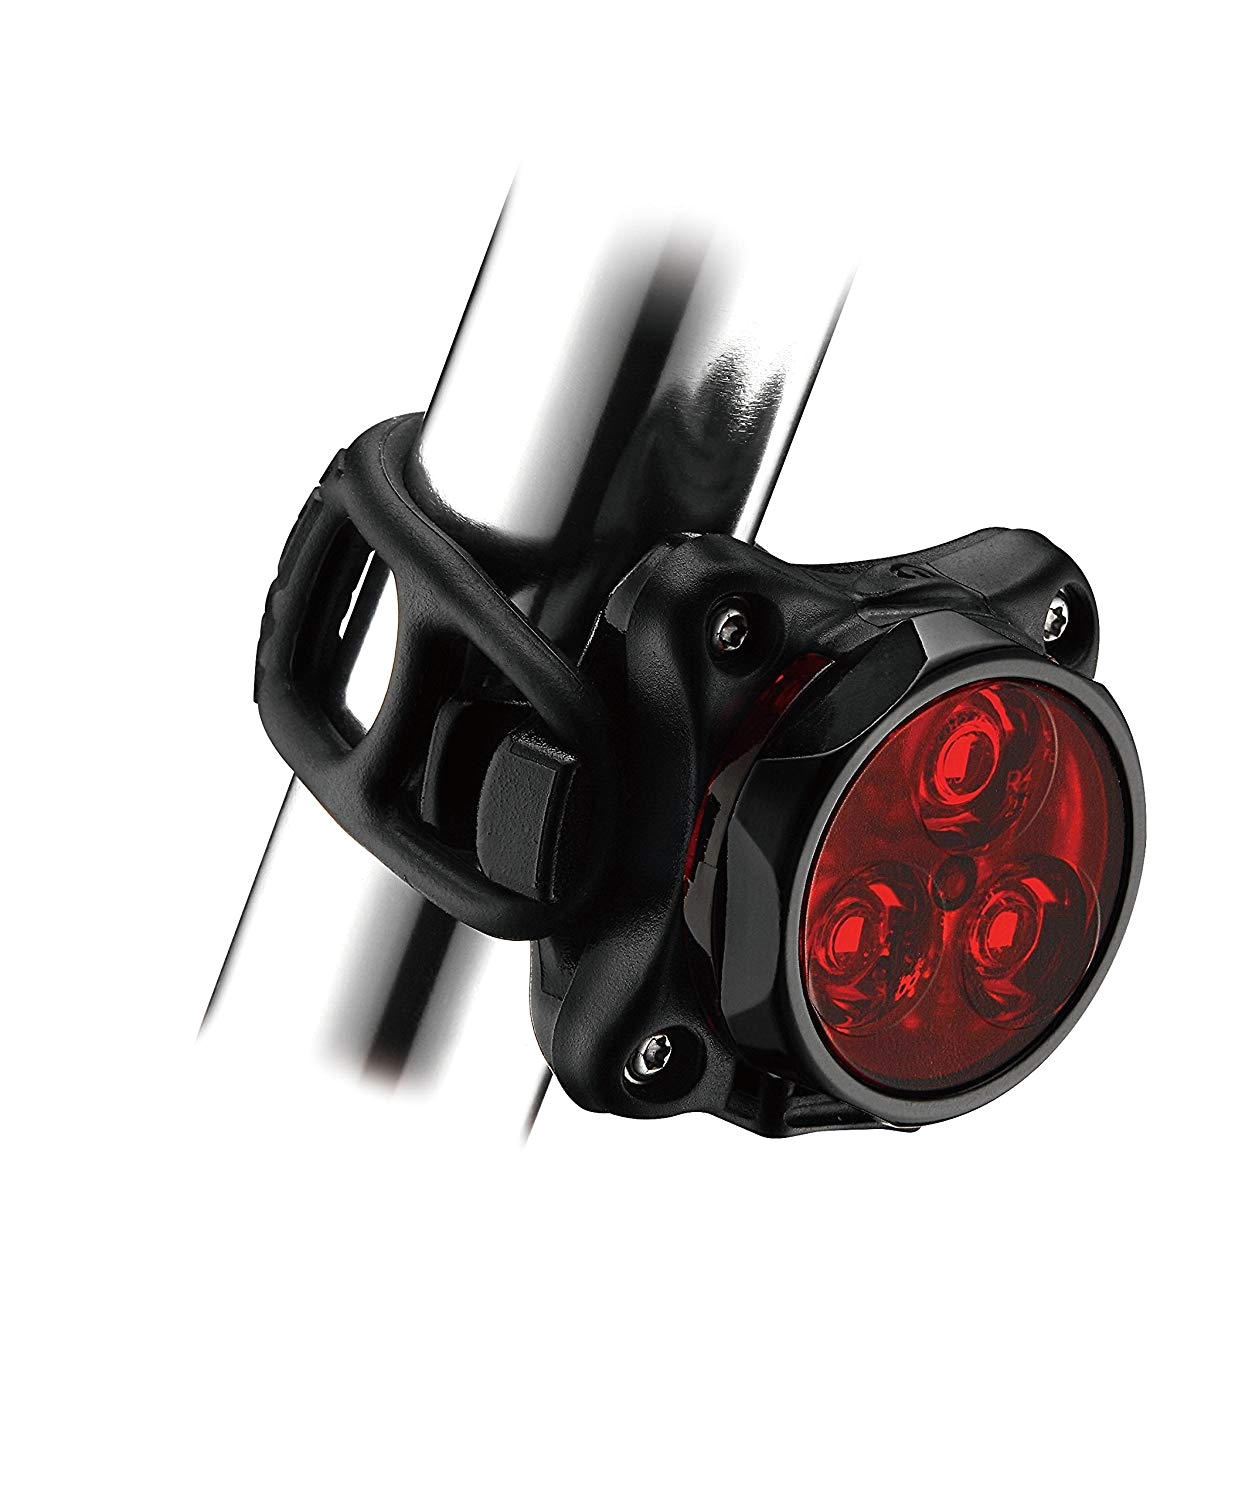 amazon com lezyne zecto drive taillight black bike taillights sports outdoors